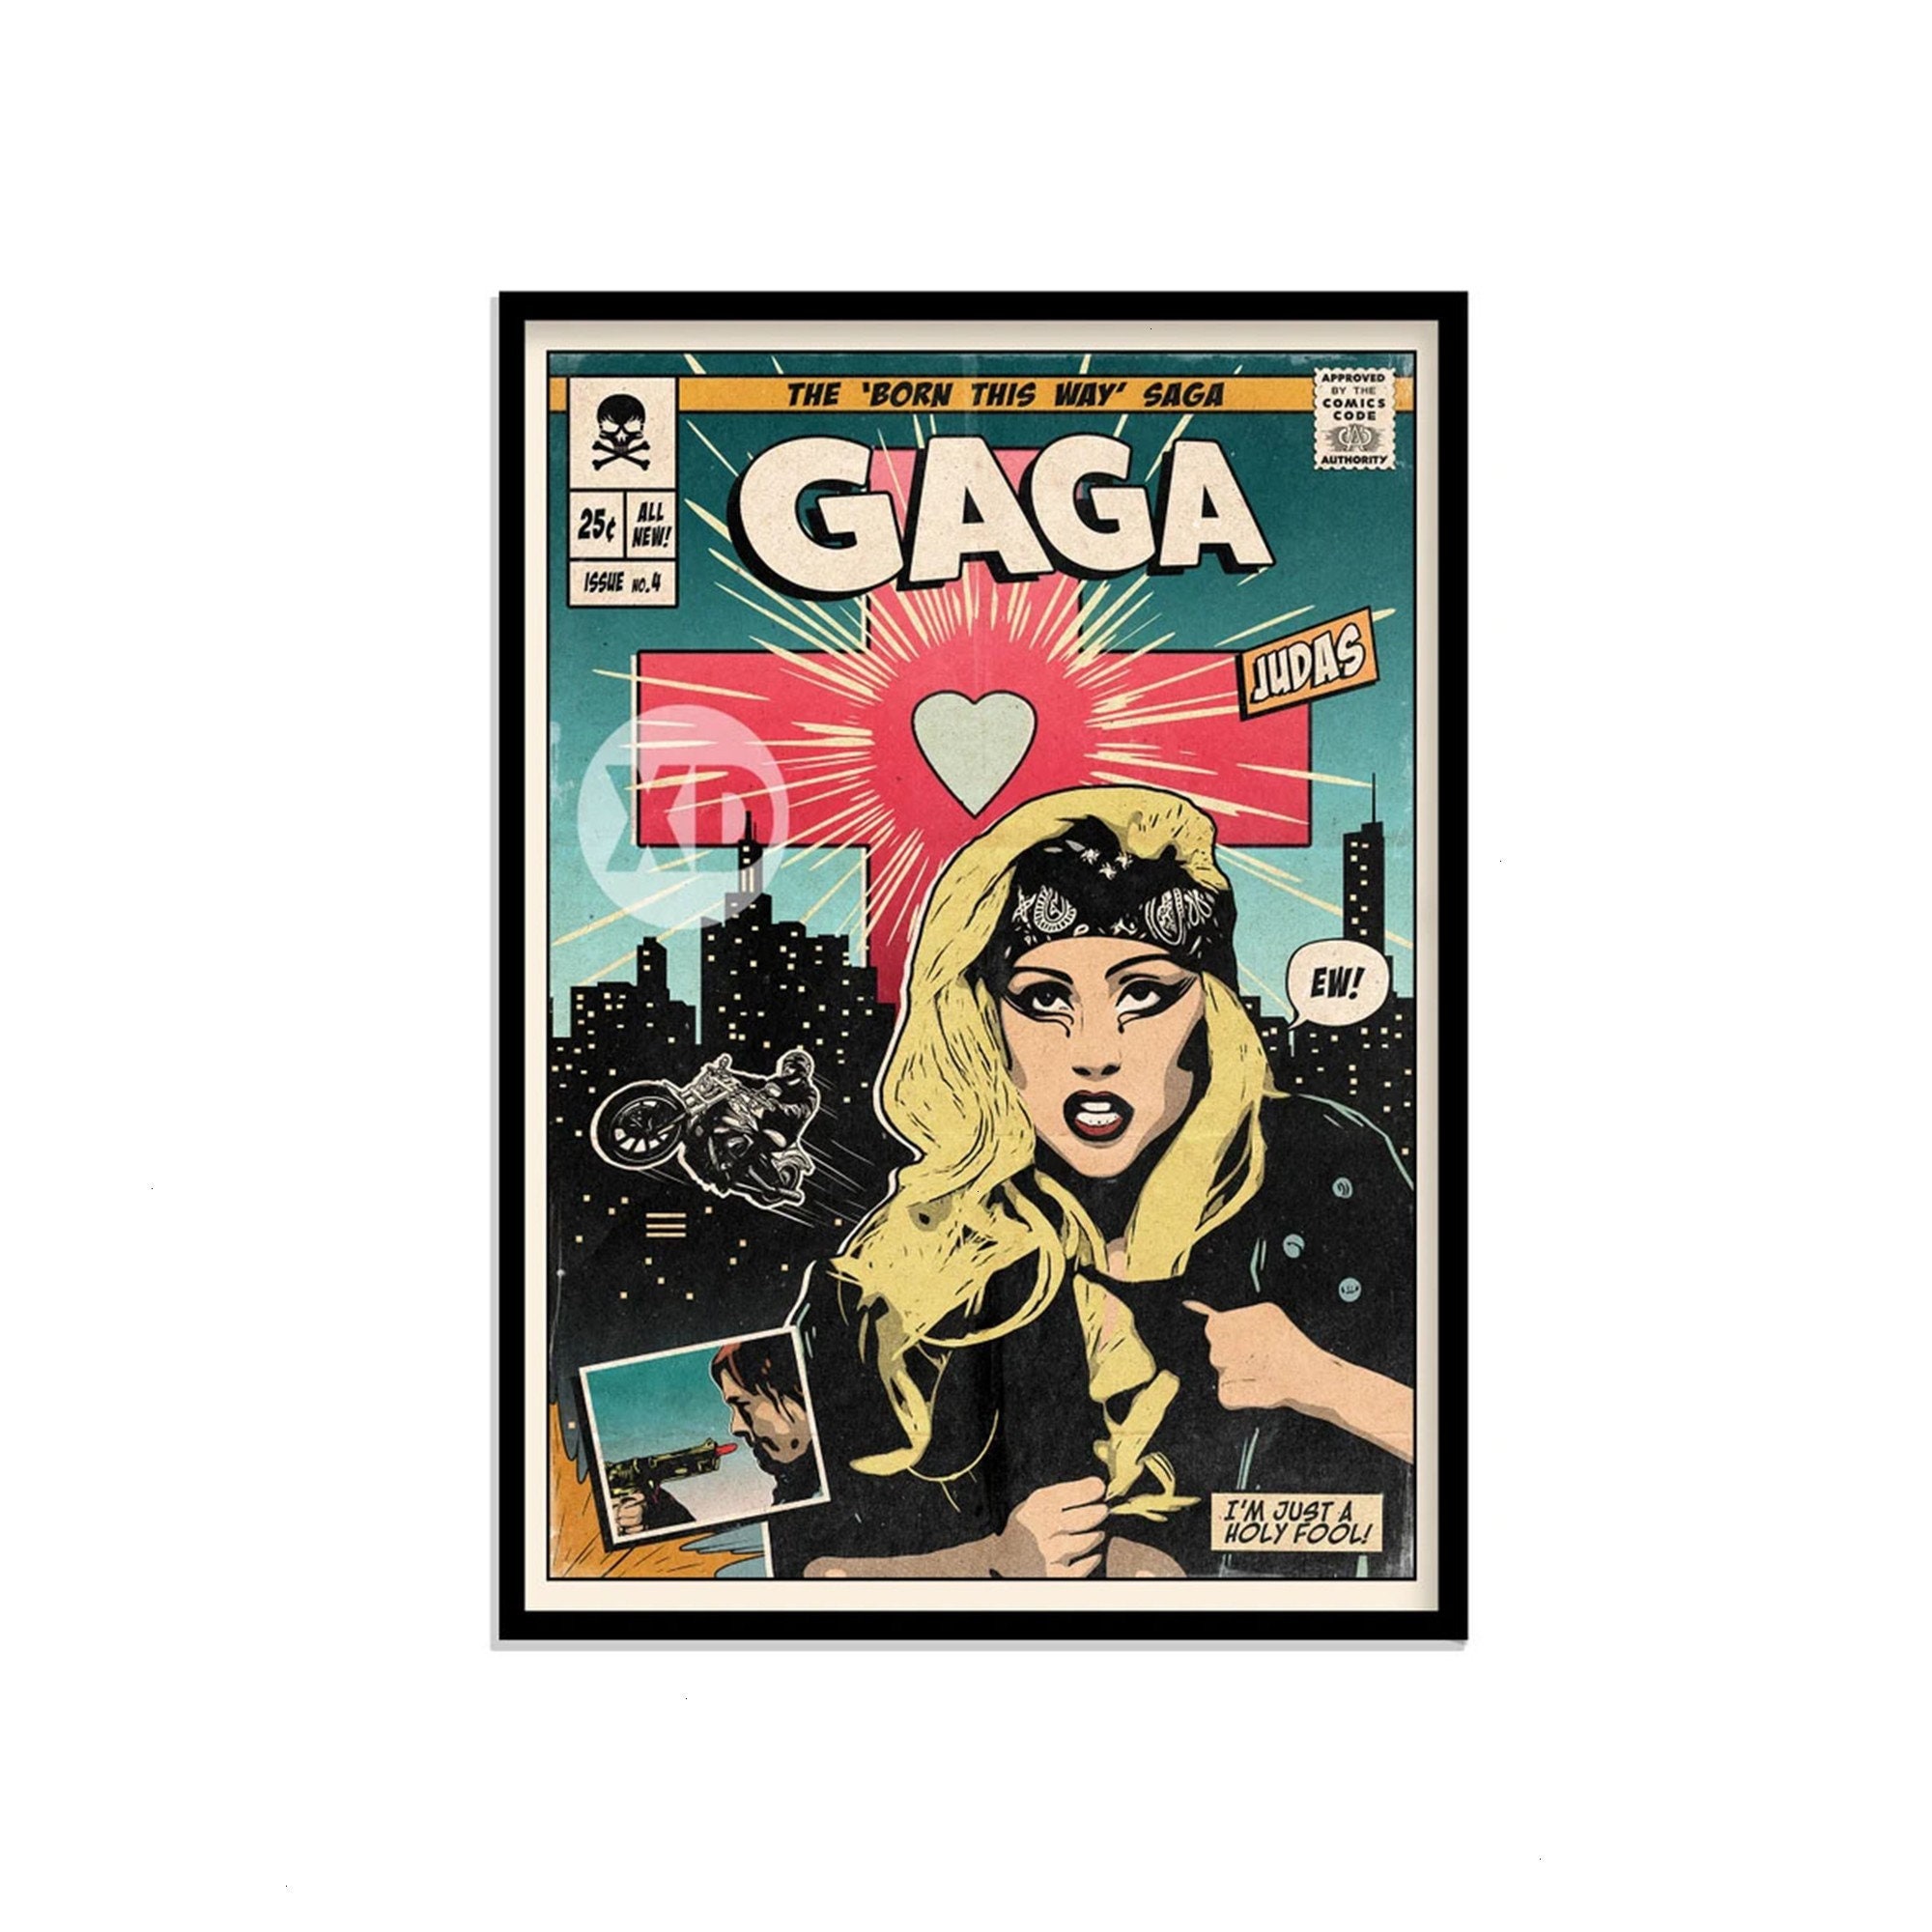 Gaga Judas Vintage Comic Cover Poster, Lady The Chromatica Ball Tour 2022 Poster